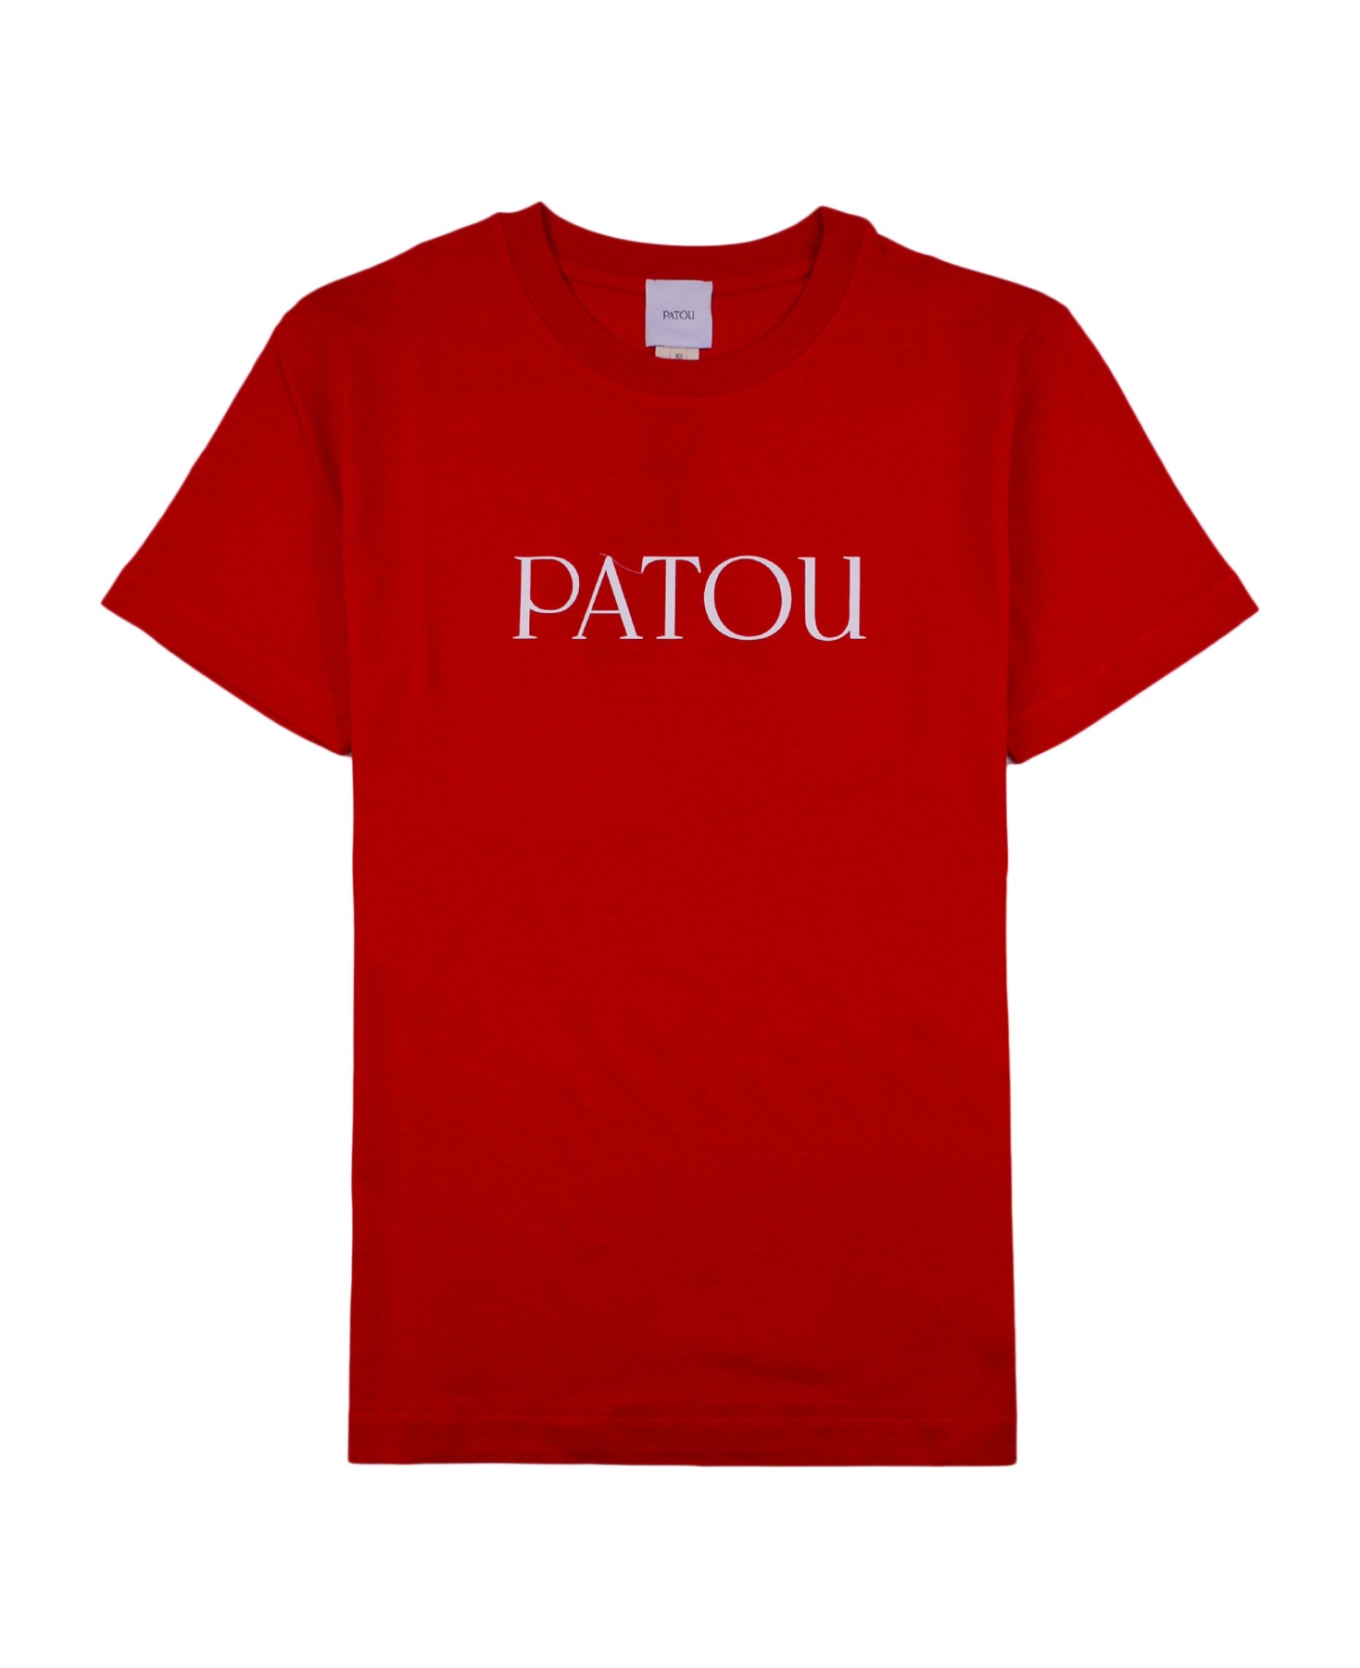 Patou T-shirt - RED